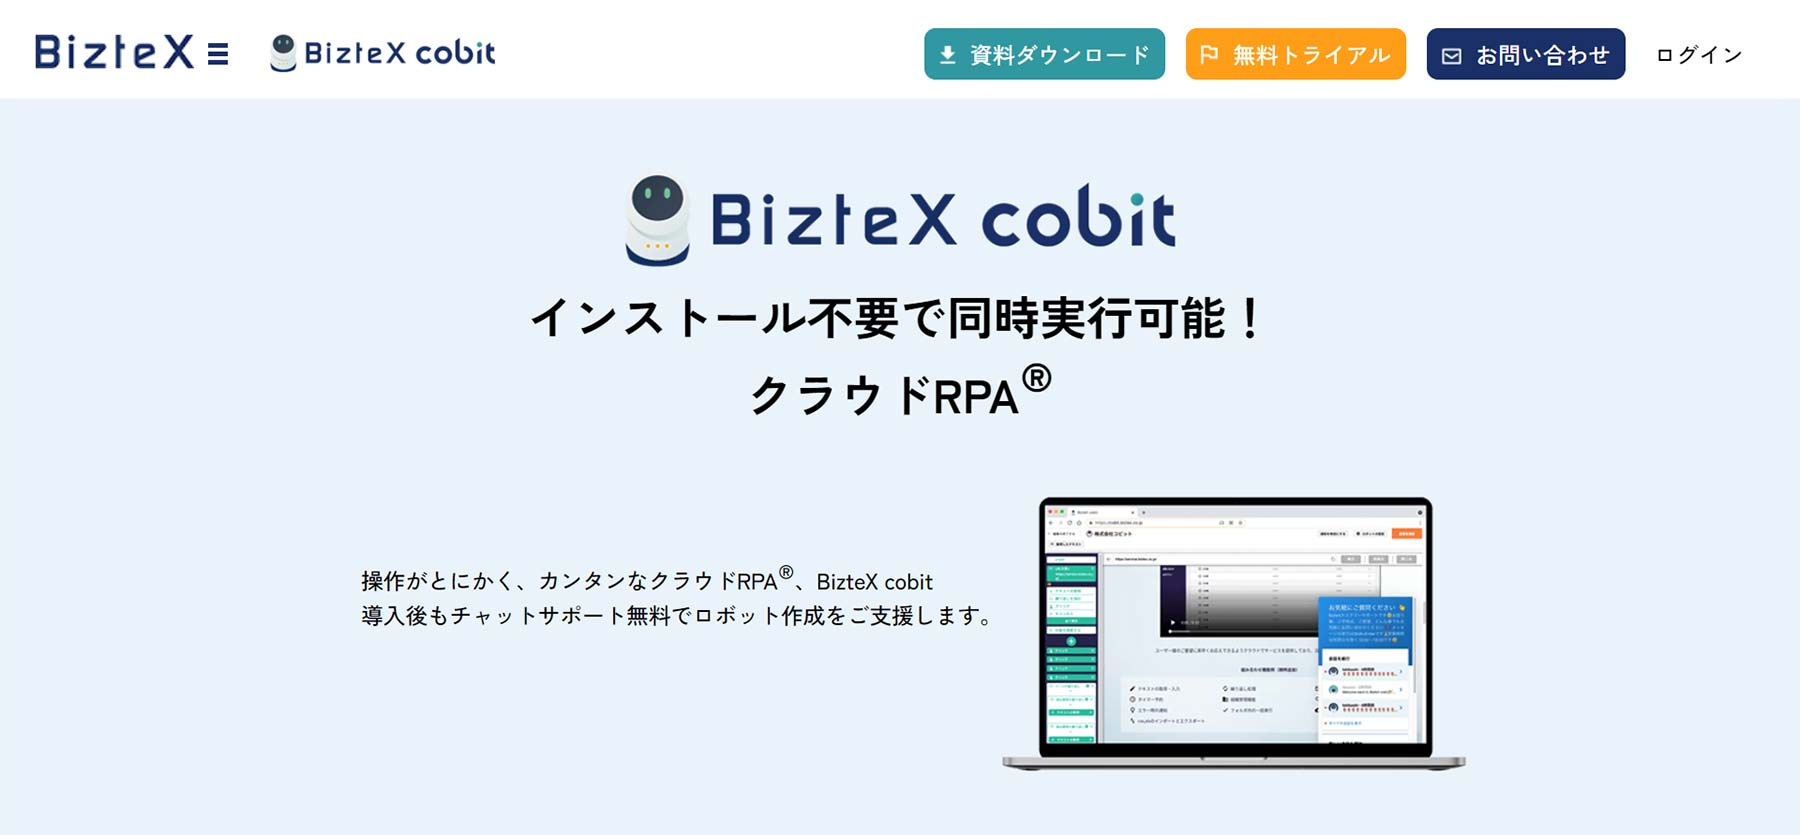 Biztex cobit公式Webサイト